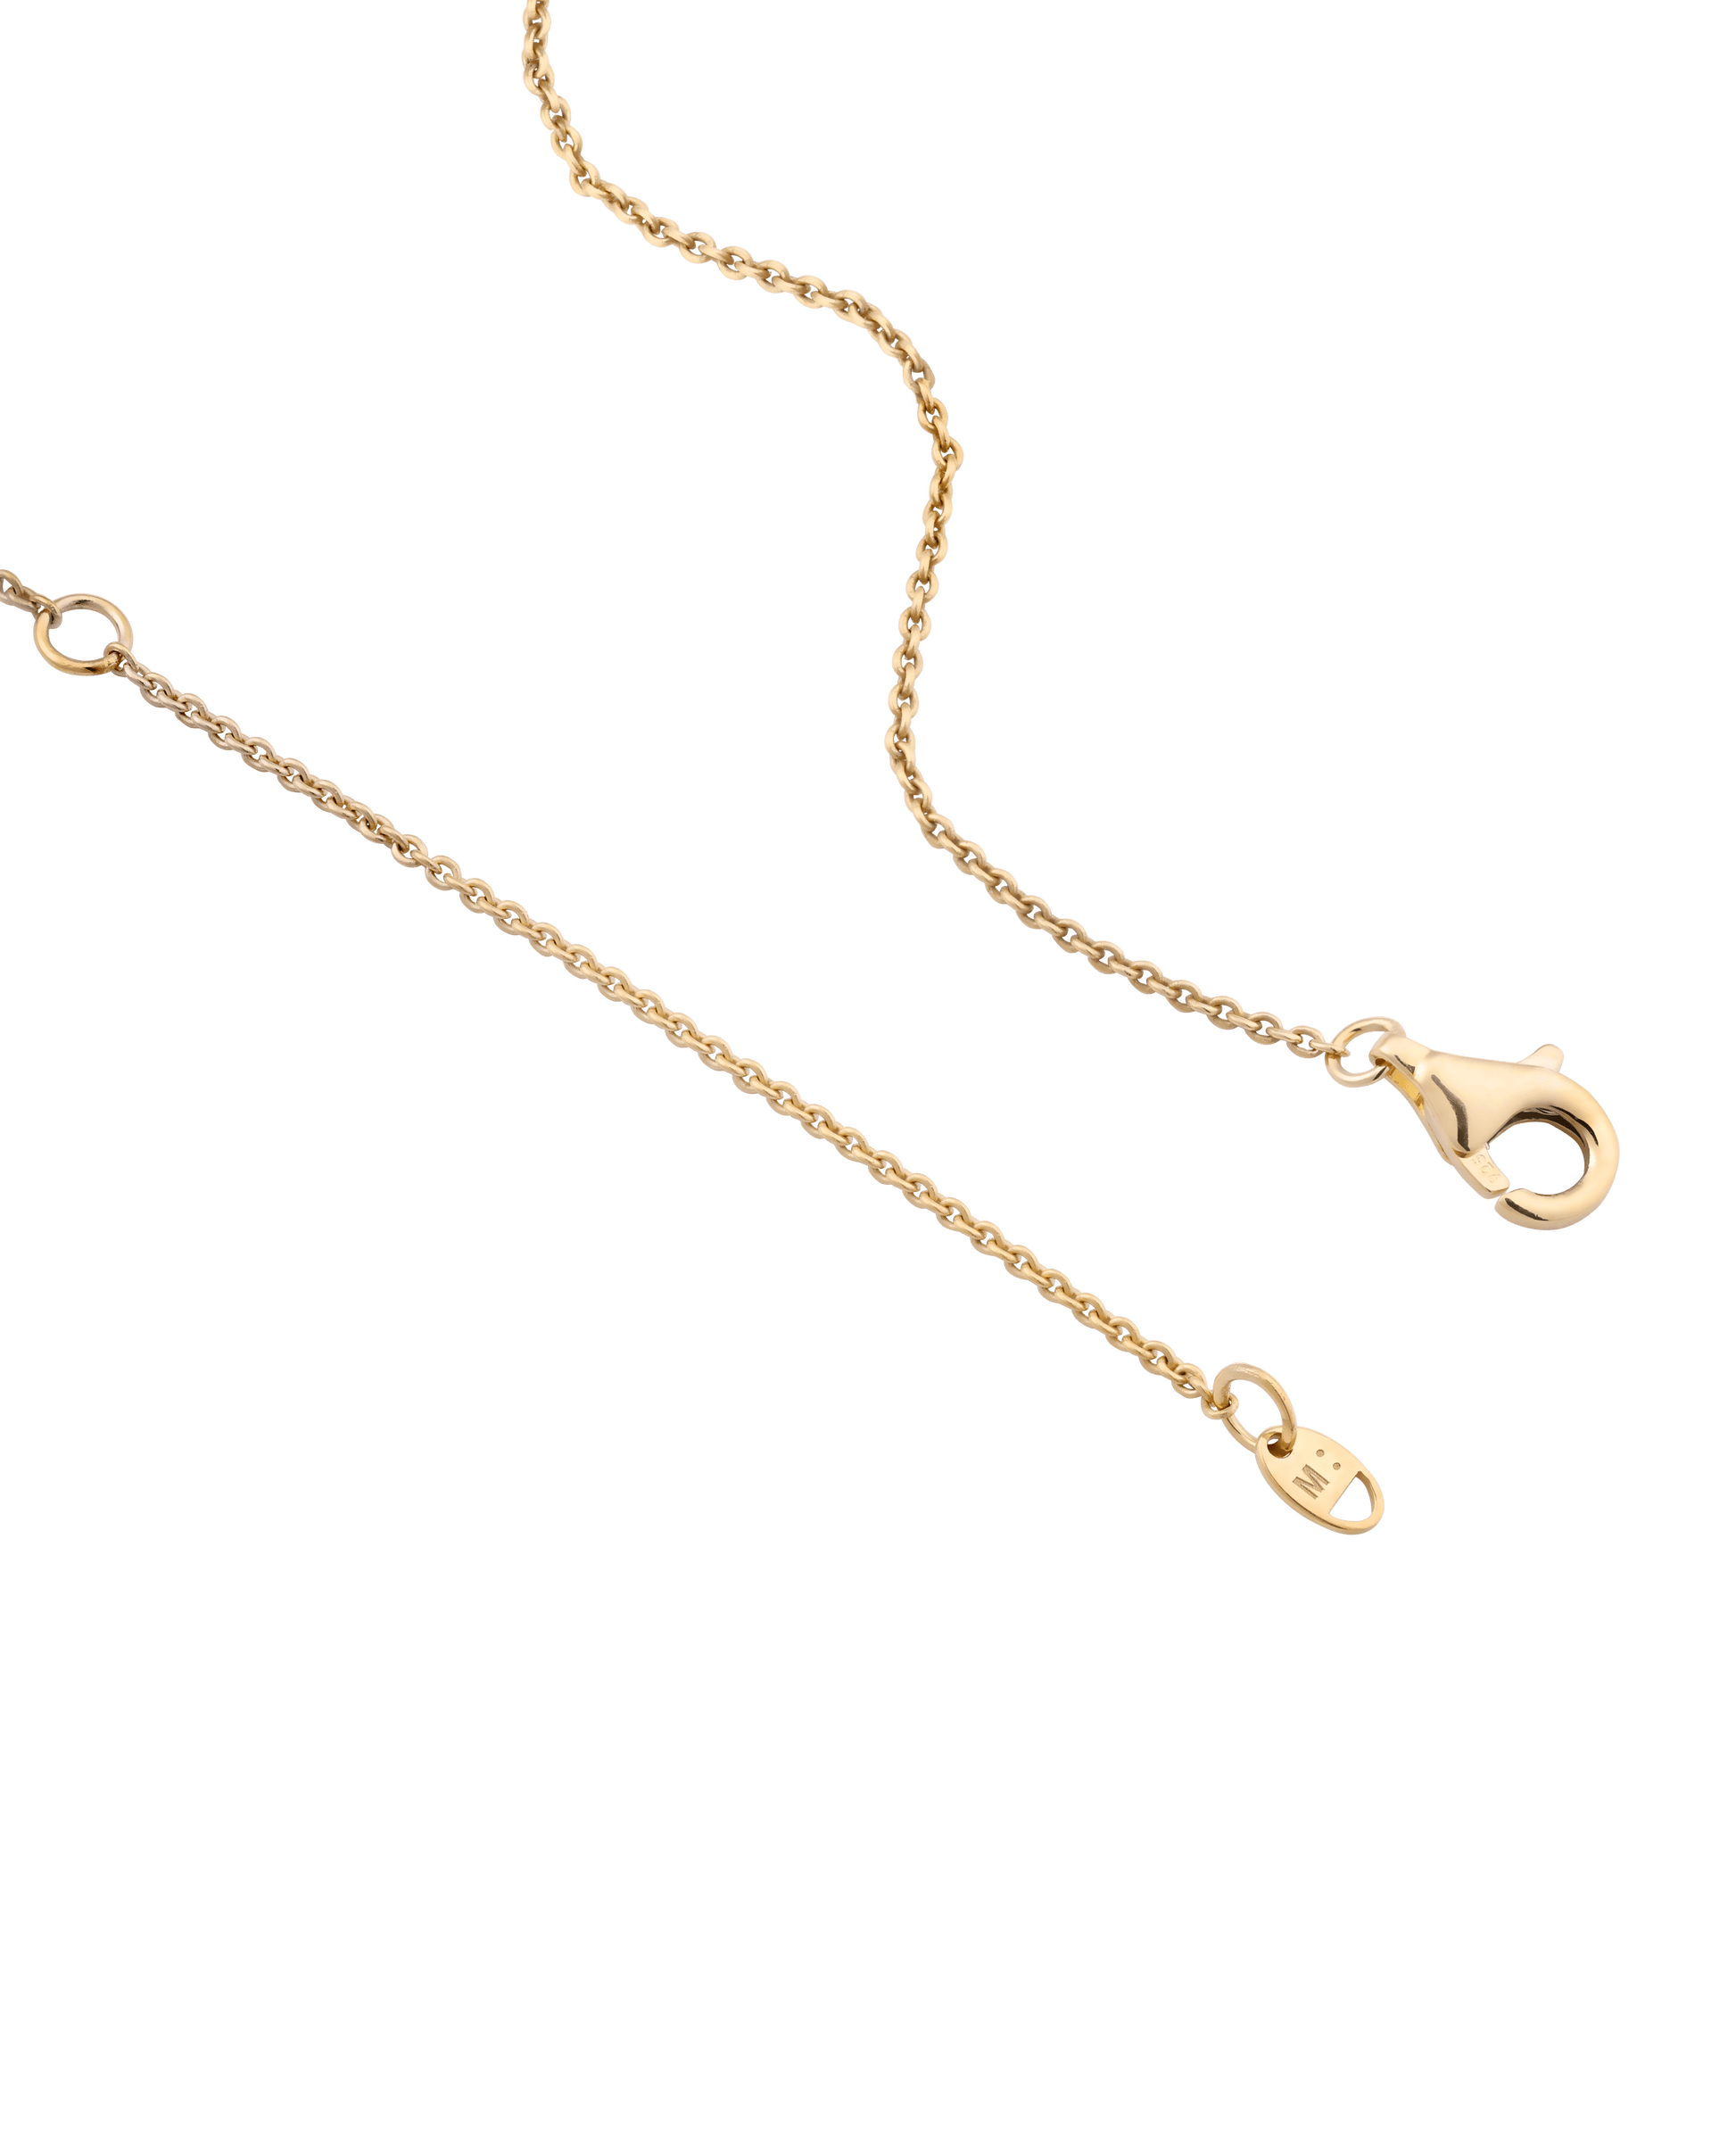 Oval Solitaire Diamond Bracelet - 18K Gold Vermeil Bracelets magal-dev 